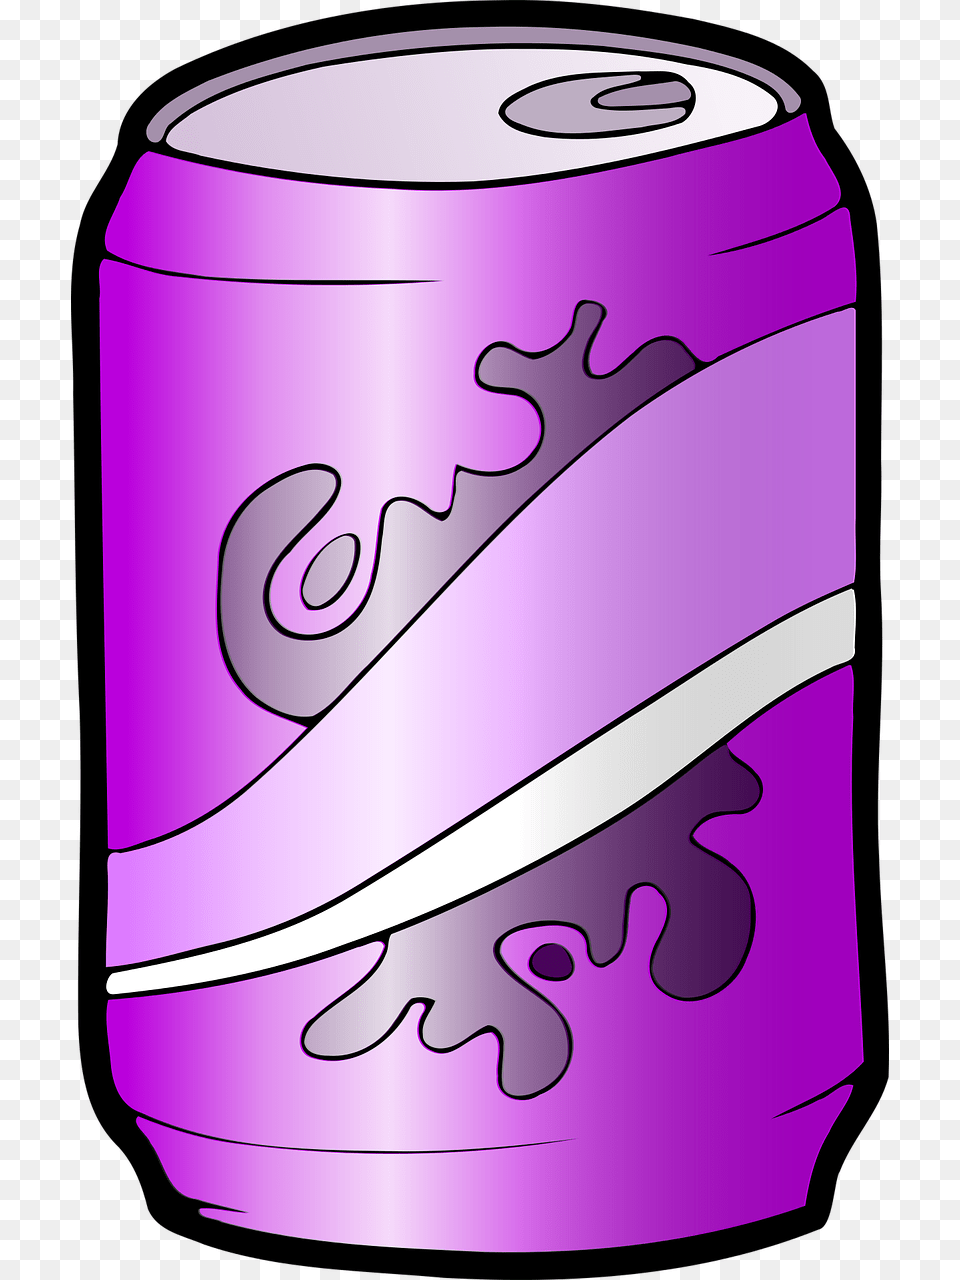 Cola Drink Junk Food Pop Refreshment Soda Purple Soda Can, Tin Free Transparent Png